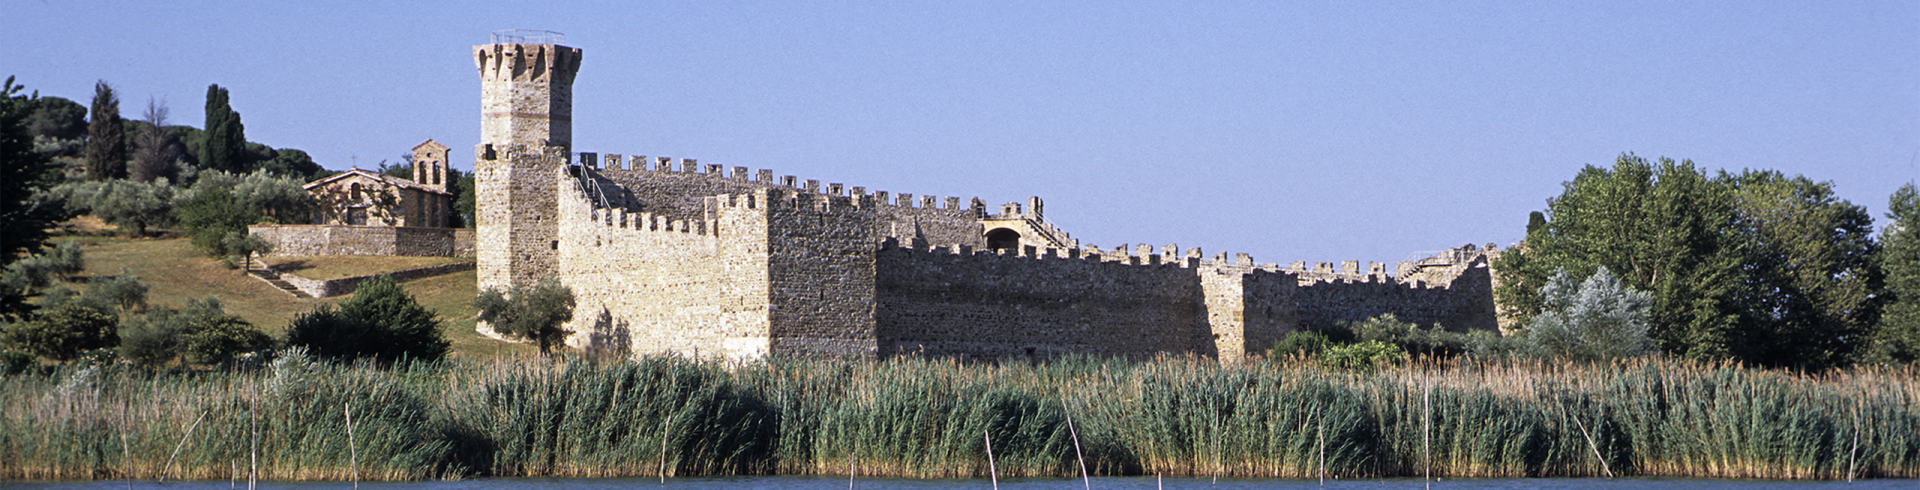 Castello dell'Isola Polvese